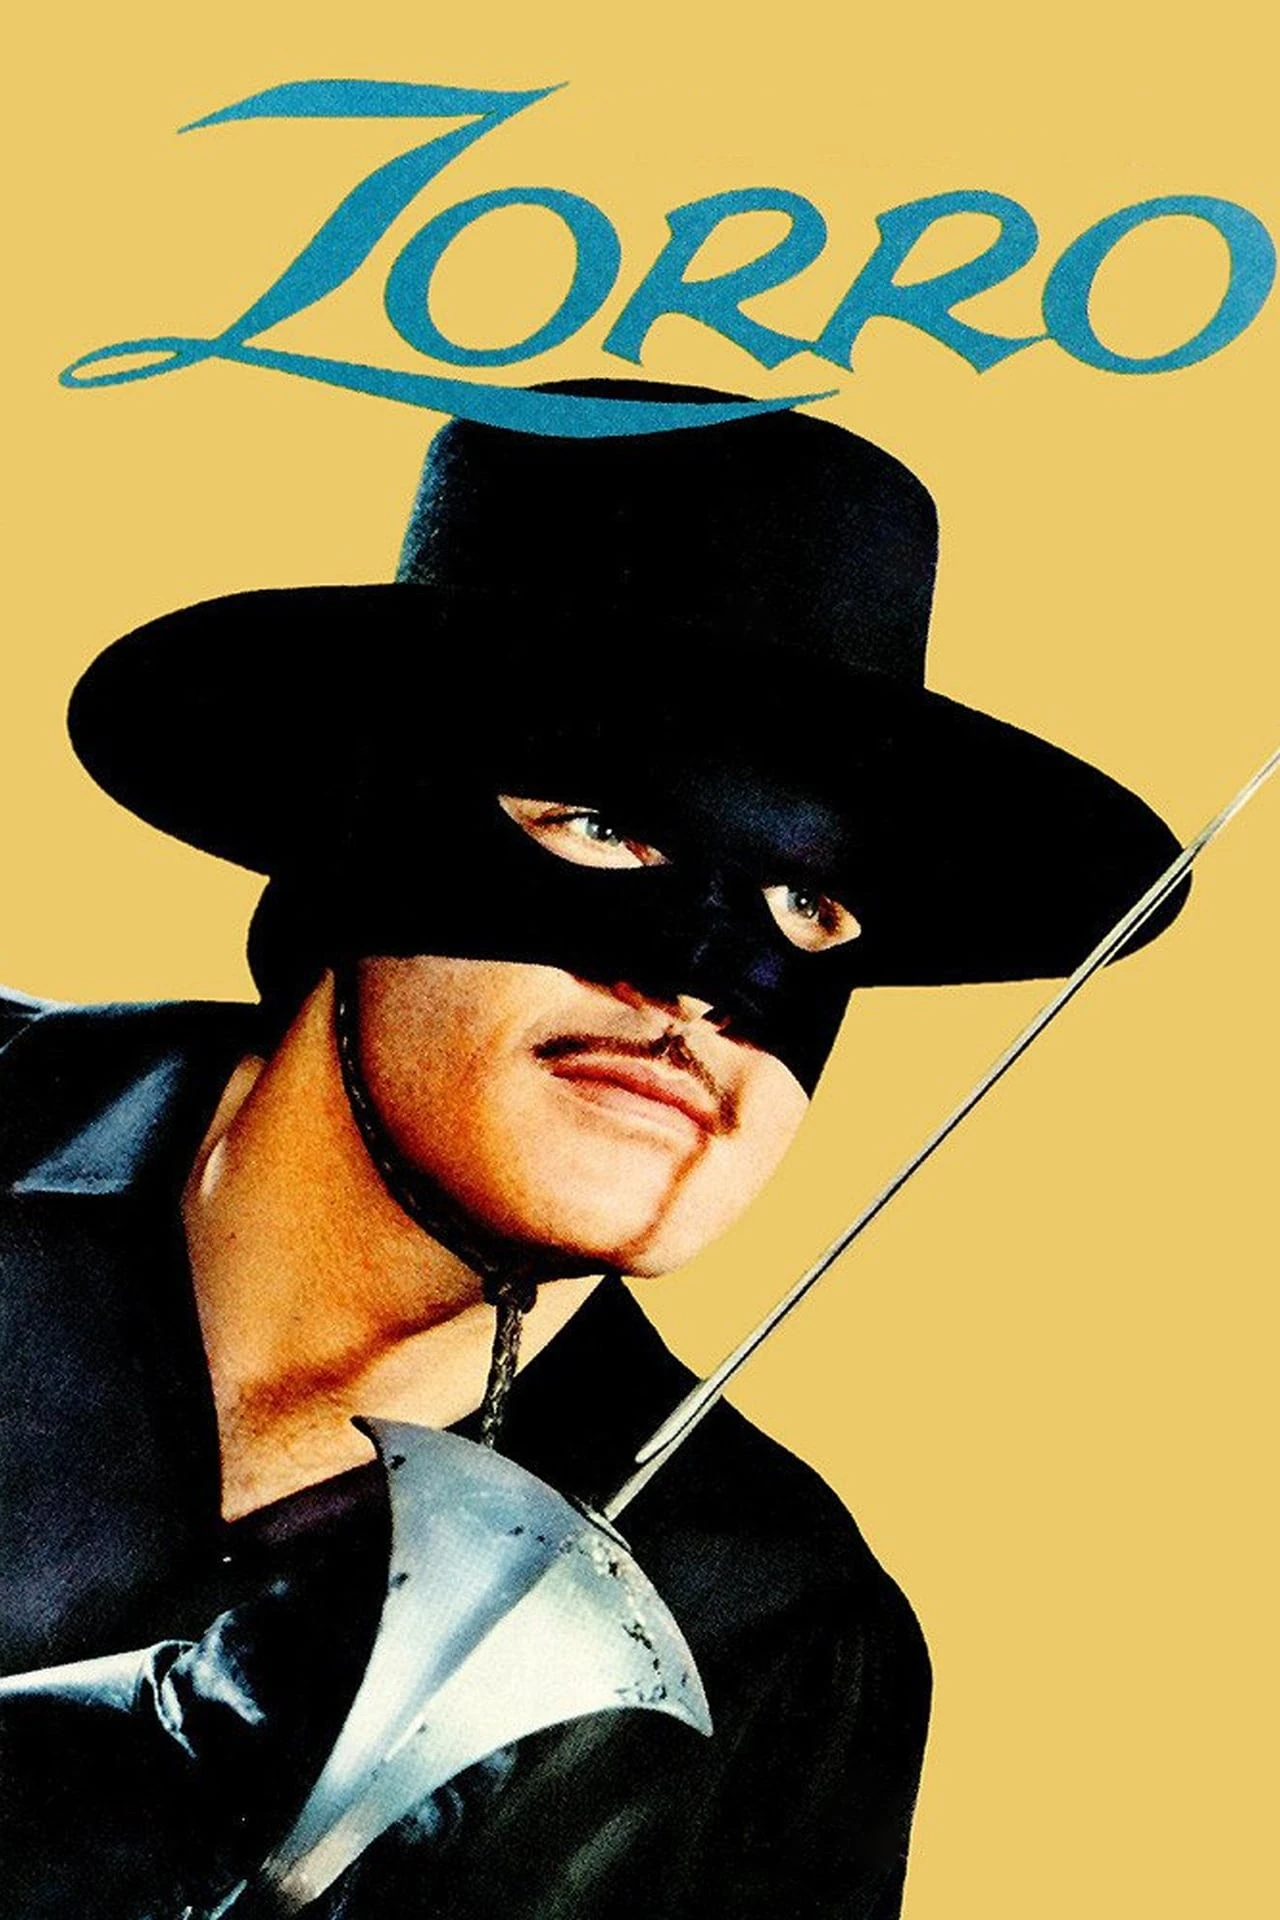 Zorro freestyle dressage to music